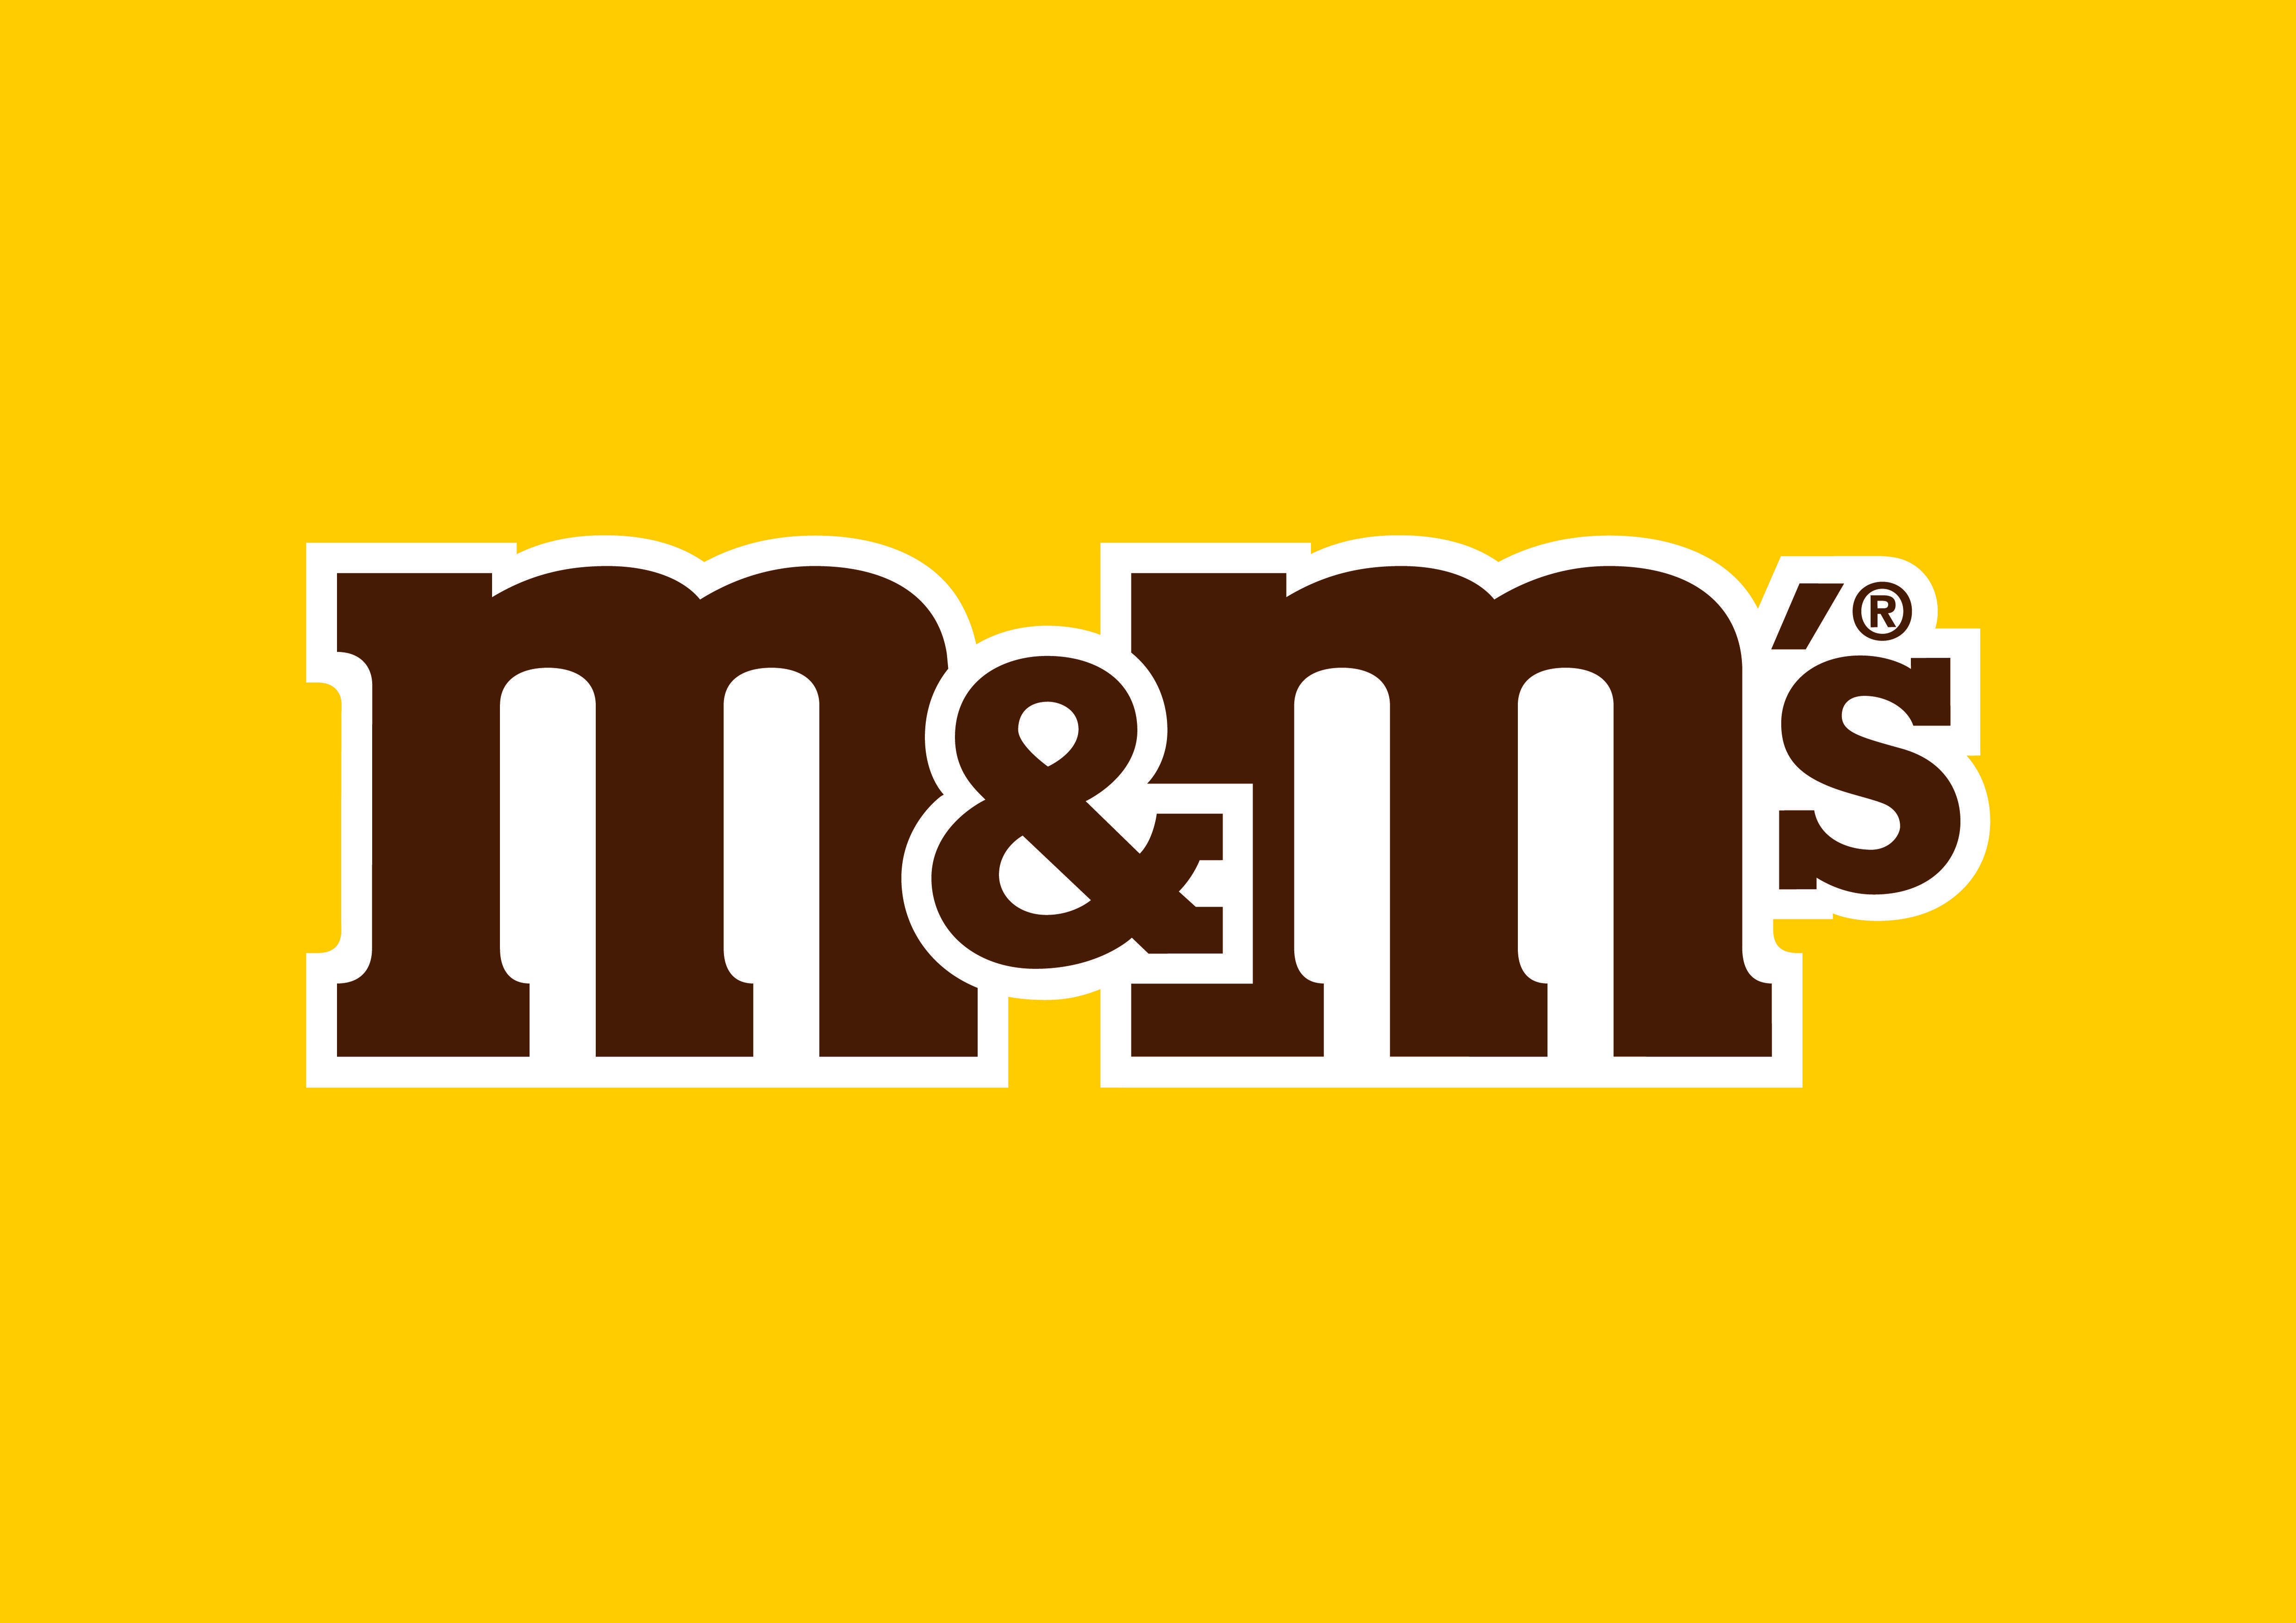 m-ms-logo-yellow-background.jpg